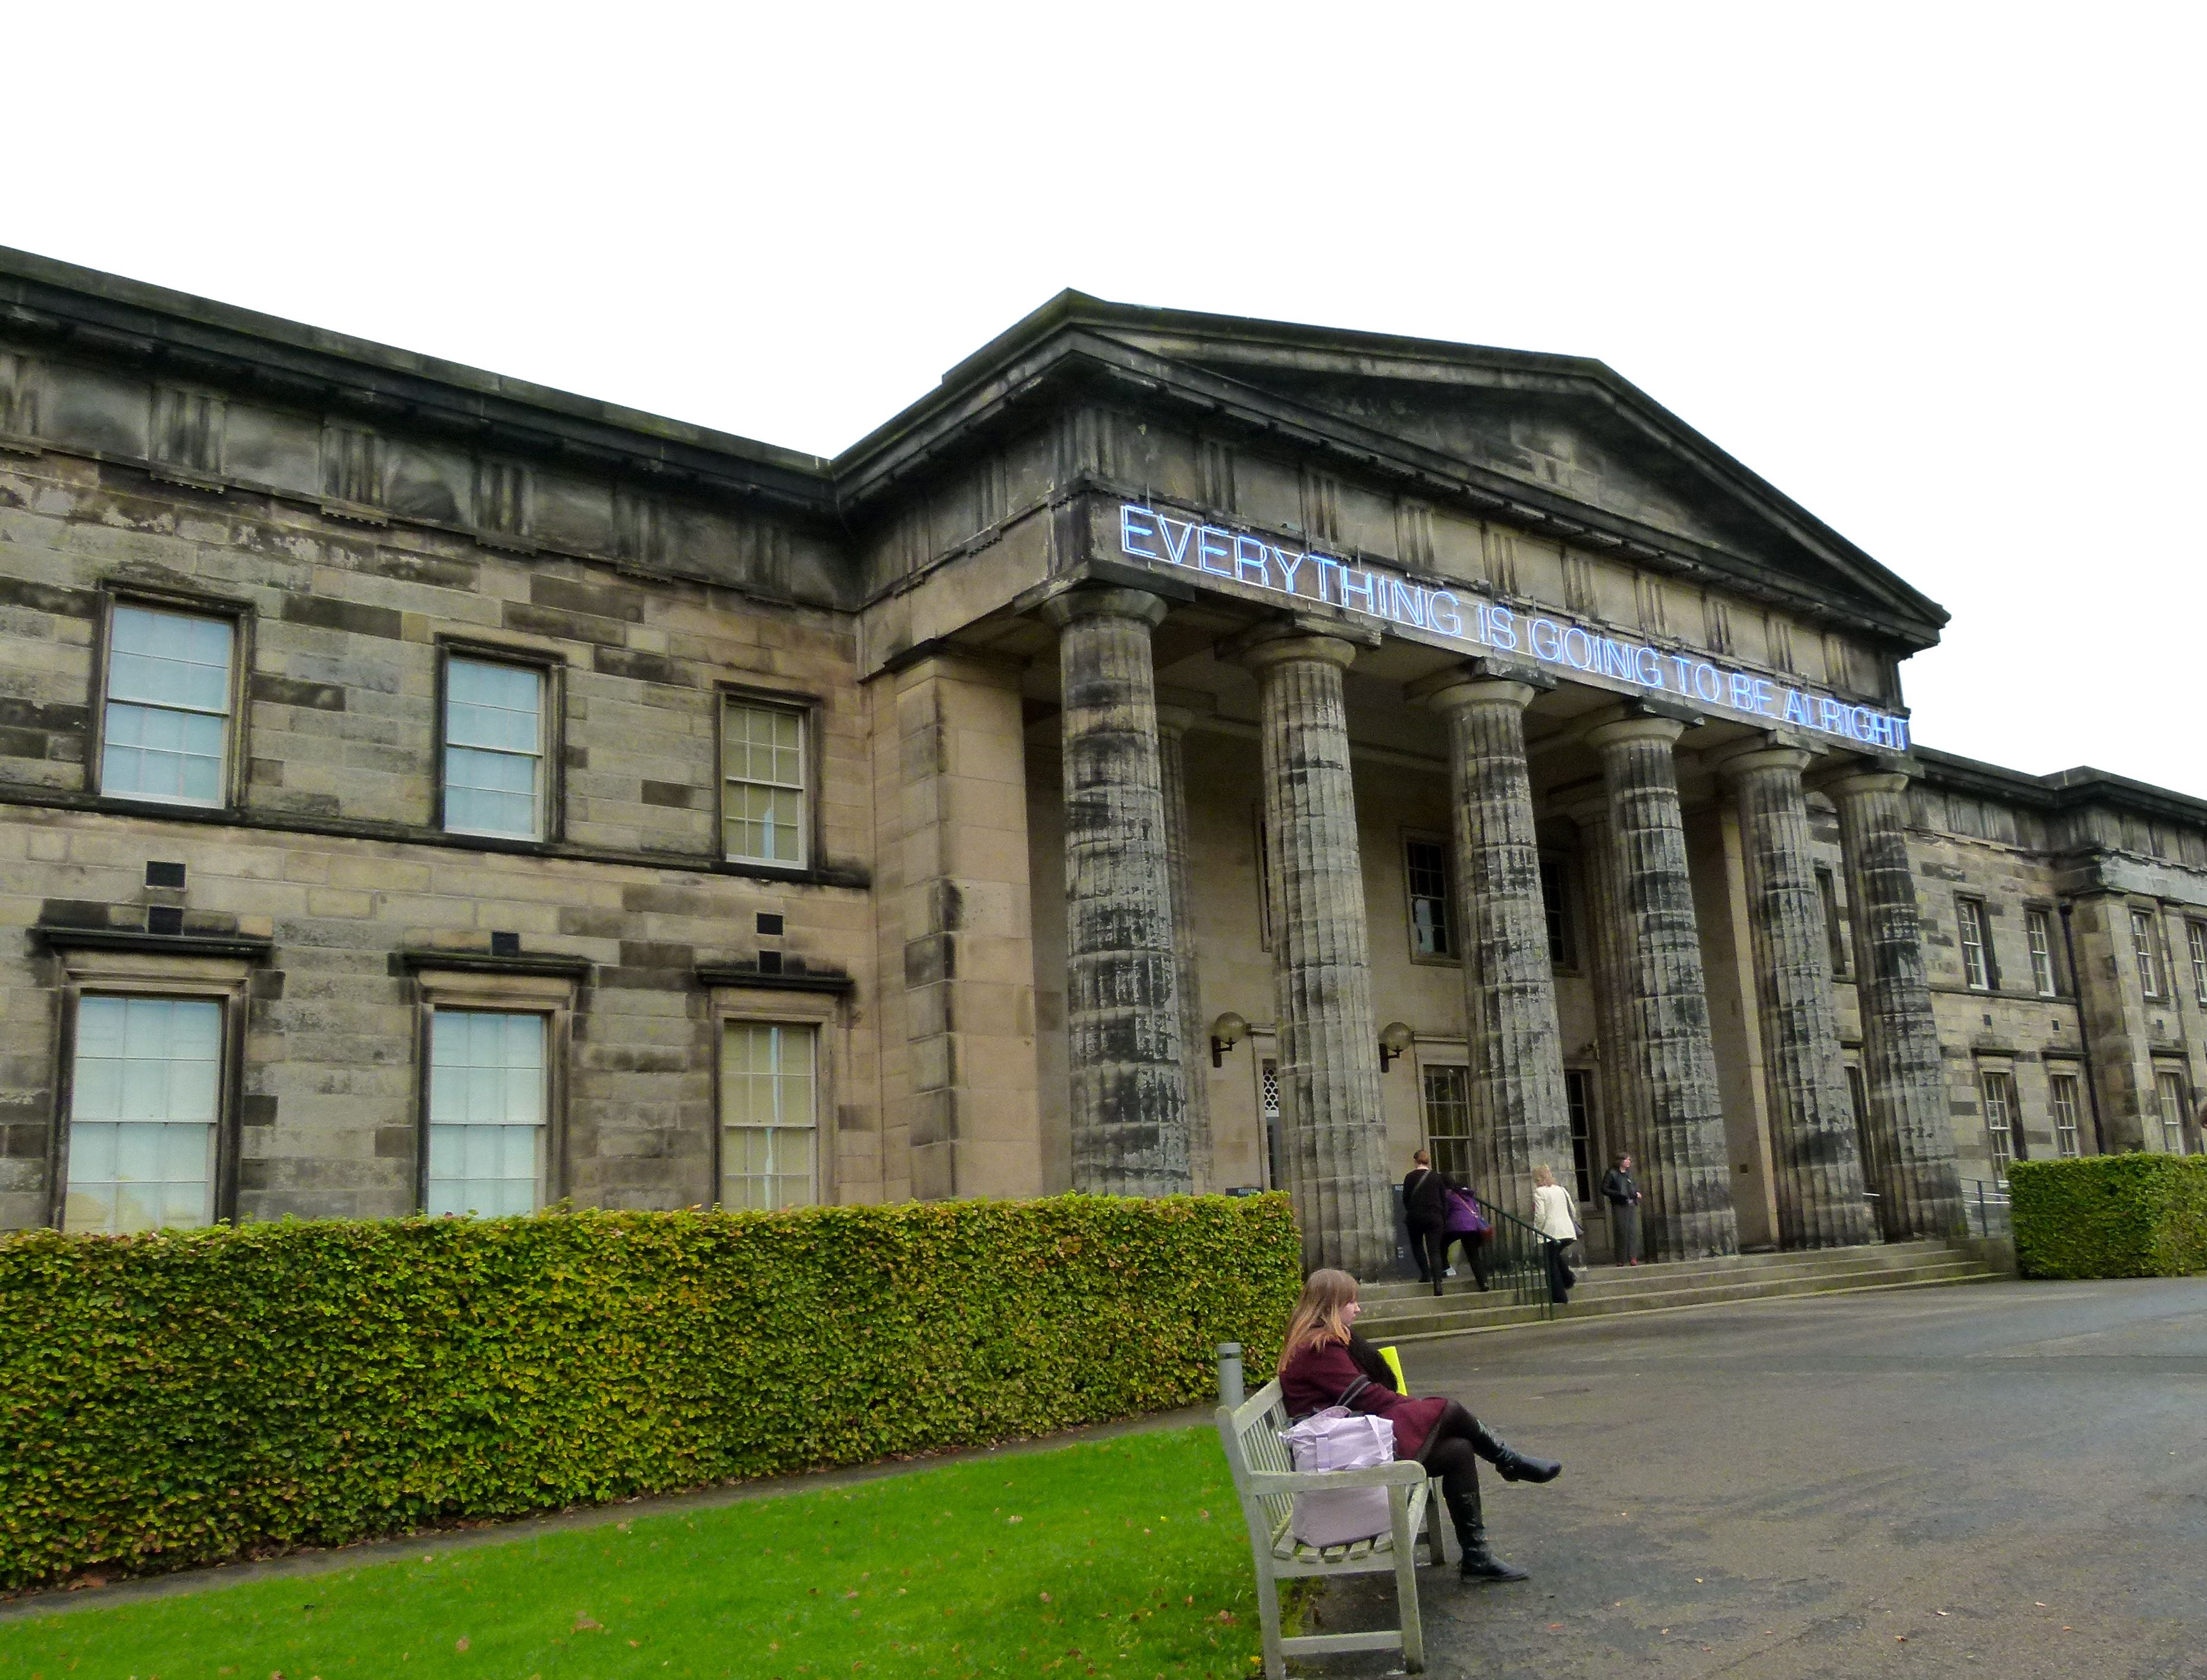 Galería Nacional de Arte Contemporáneo de Escocia, Edimburgo.